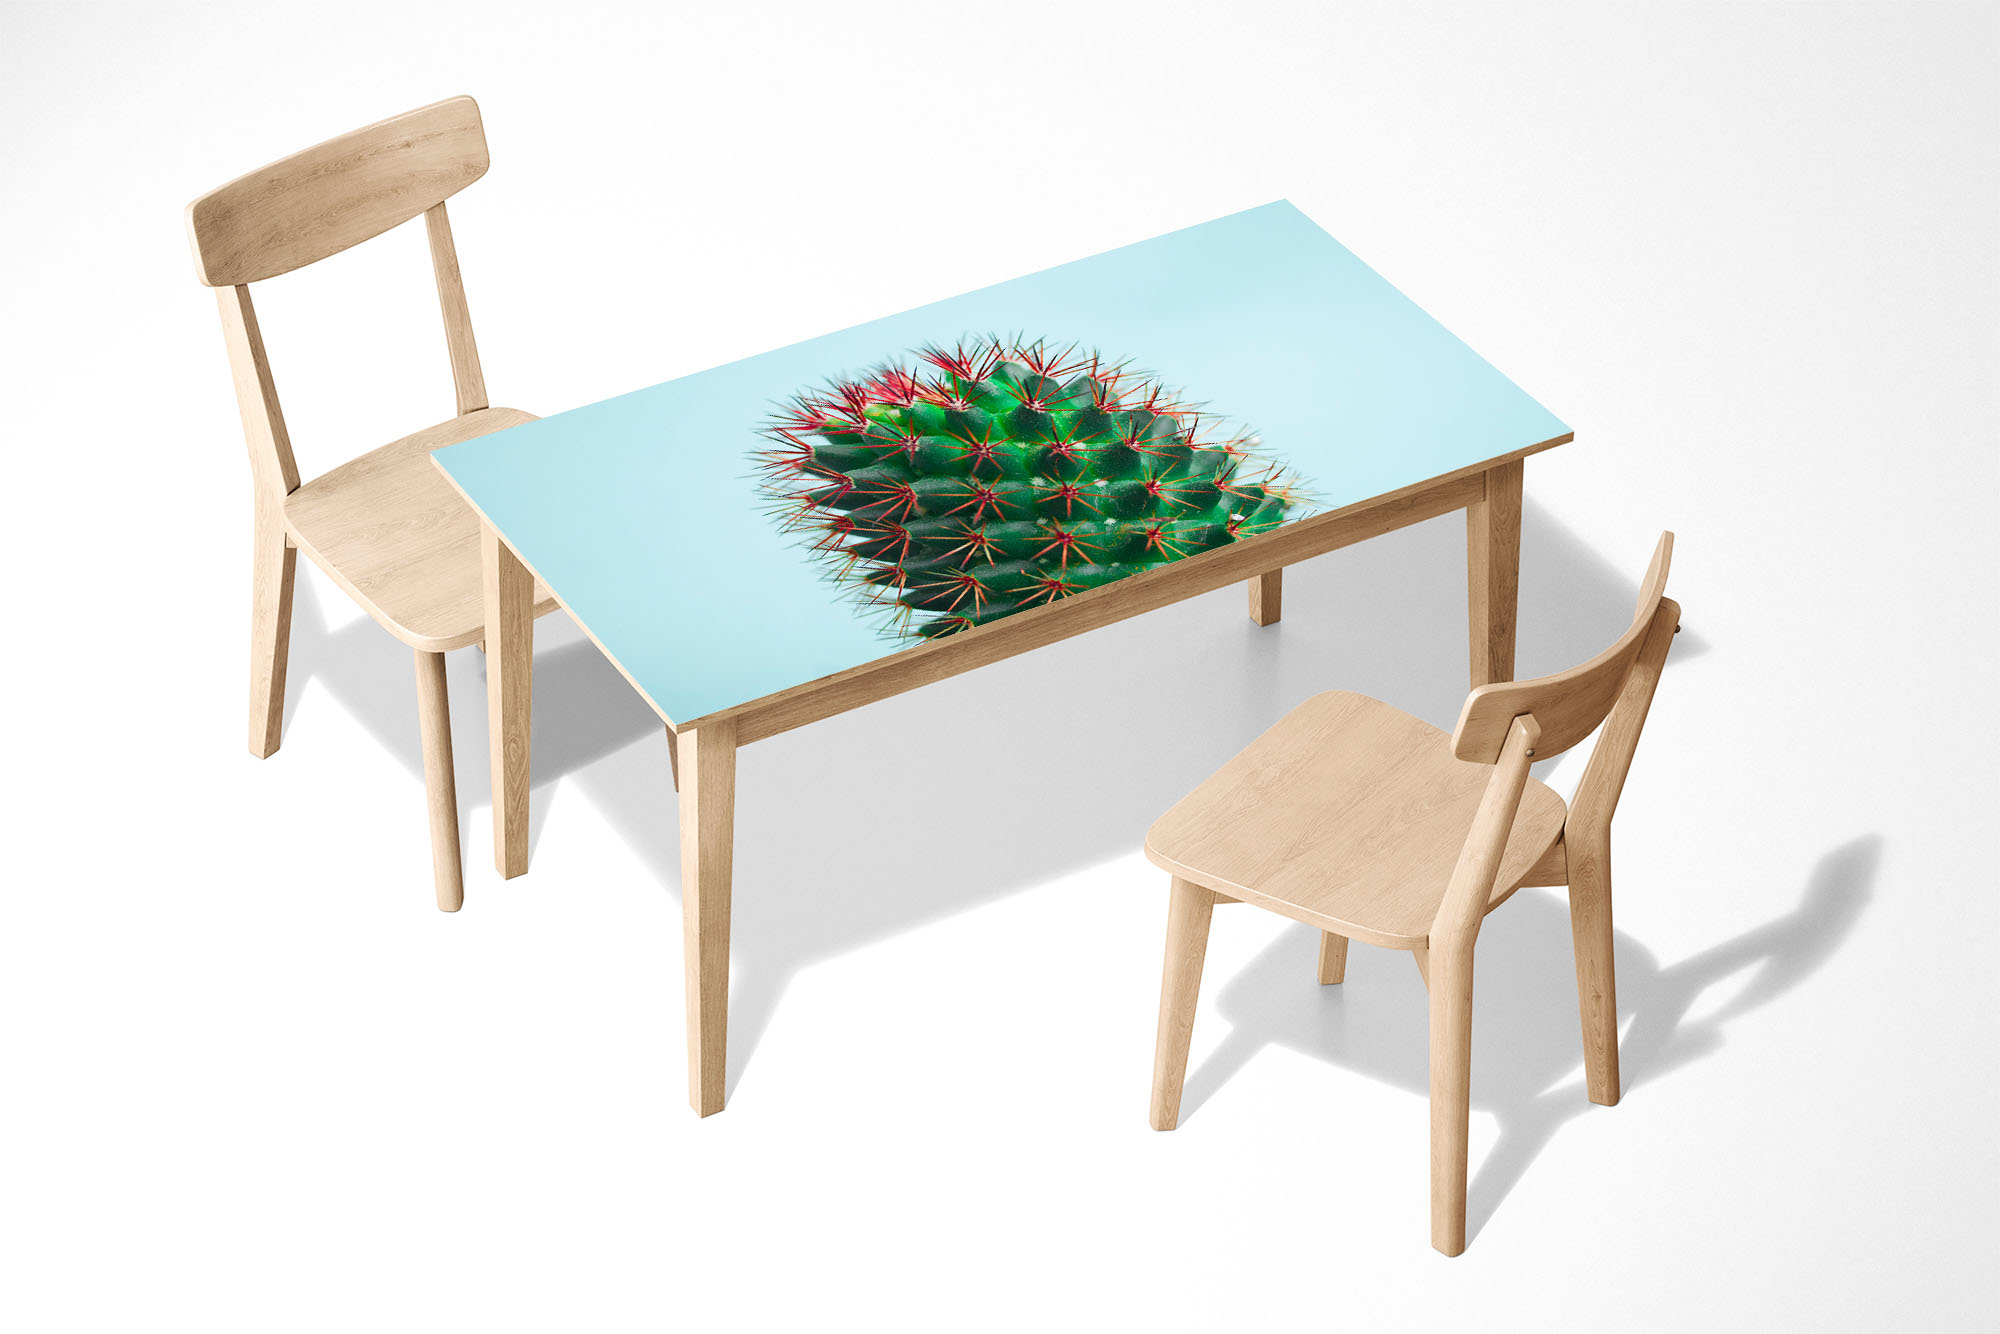 Green Cactus Laminated Self Adhesive Vinyl Table Desk Art Décor Cover